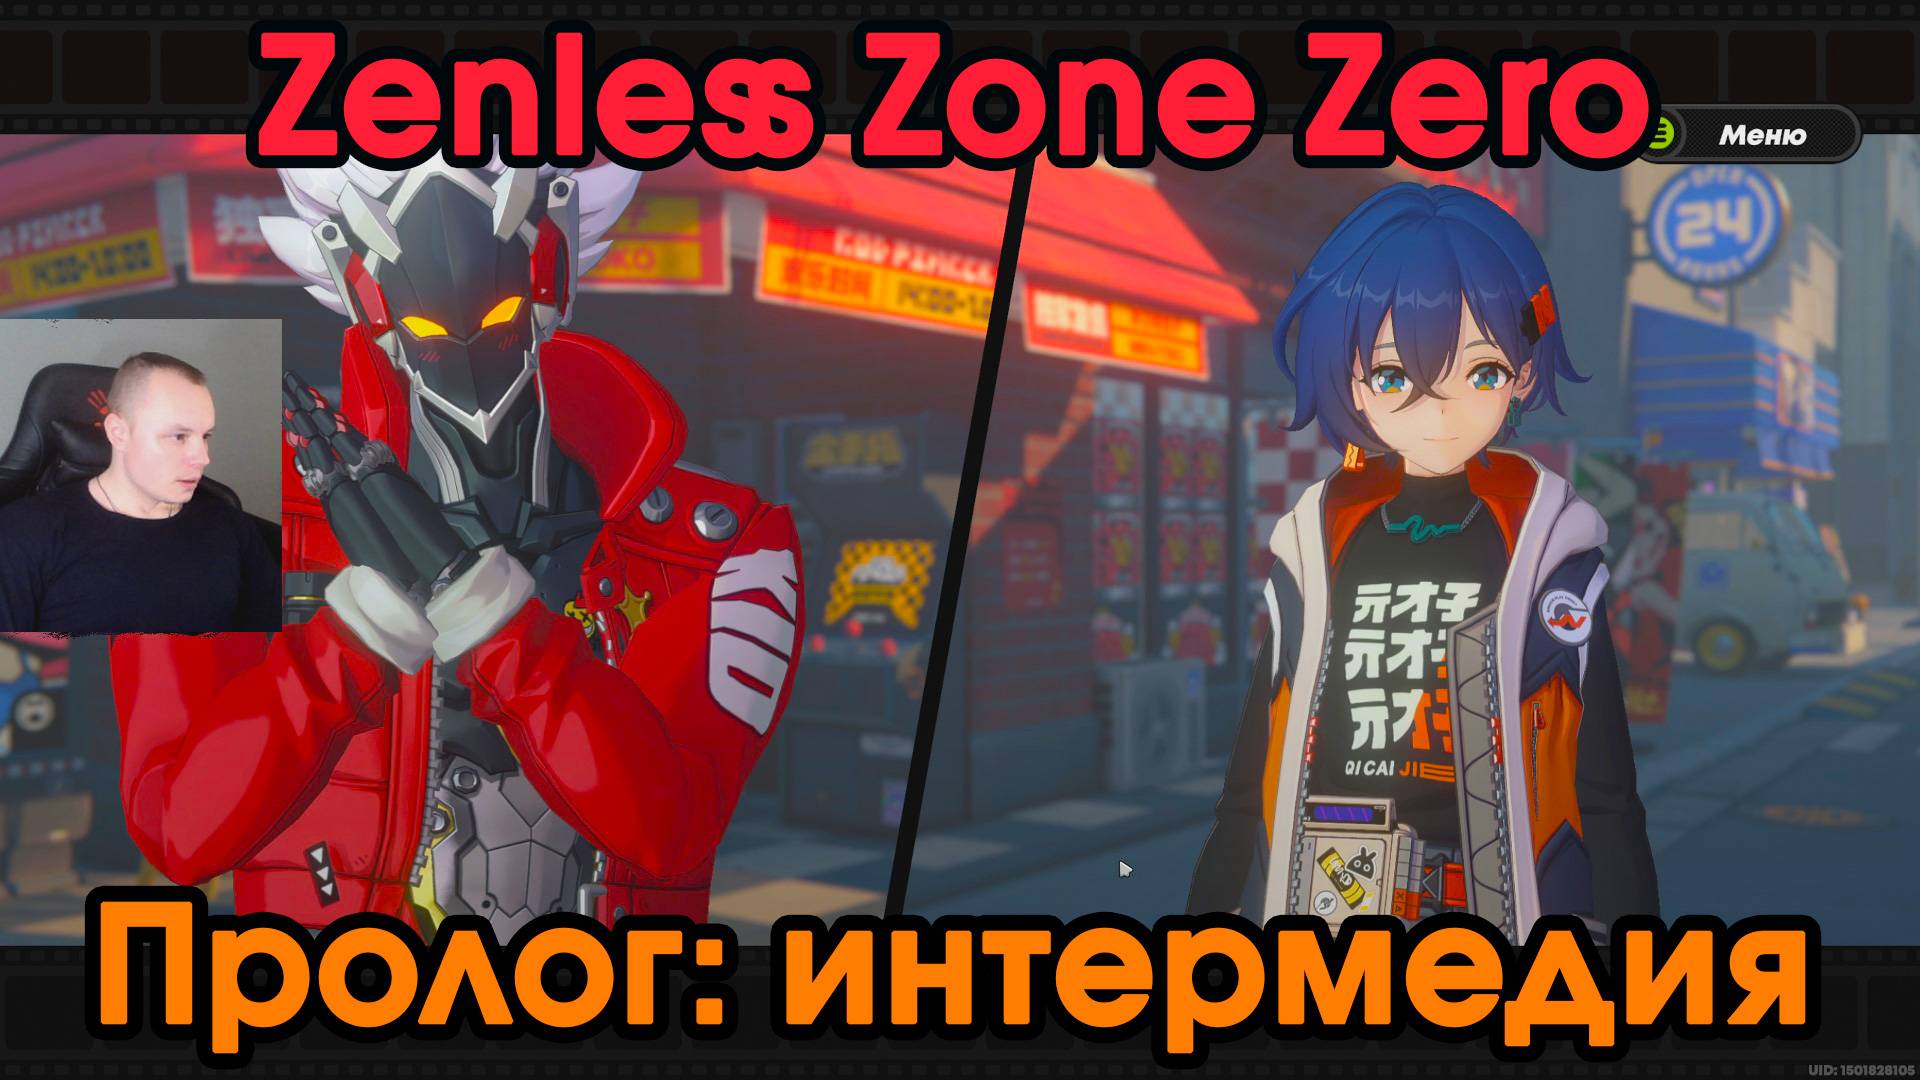 Zenless Zone Zero ➤ Сюжетный заказ «Прокси и заяц» ➤Пролог: Бизнес, Странности и Справедливость➤ ZZZ